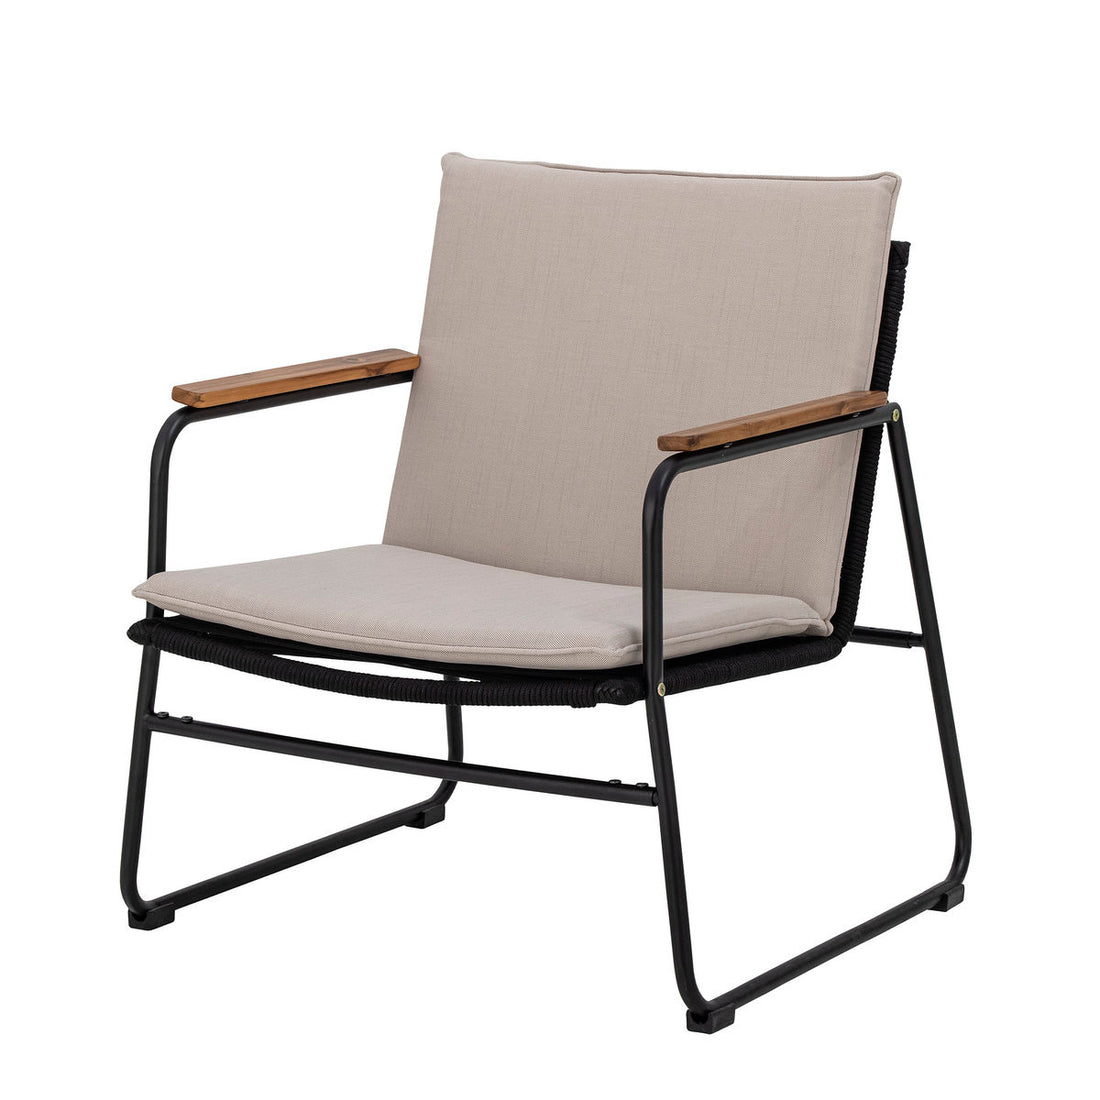 Bloomingville Hampton Lounge Chair, Black, Metal